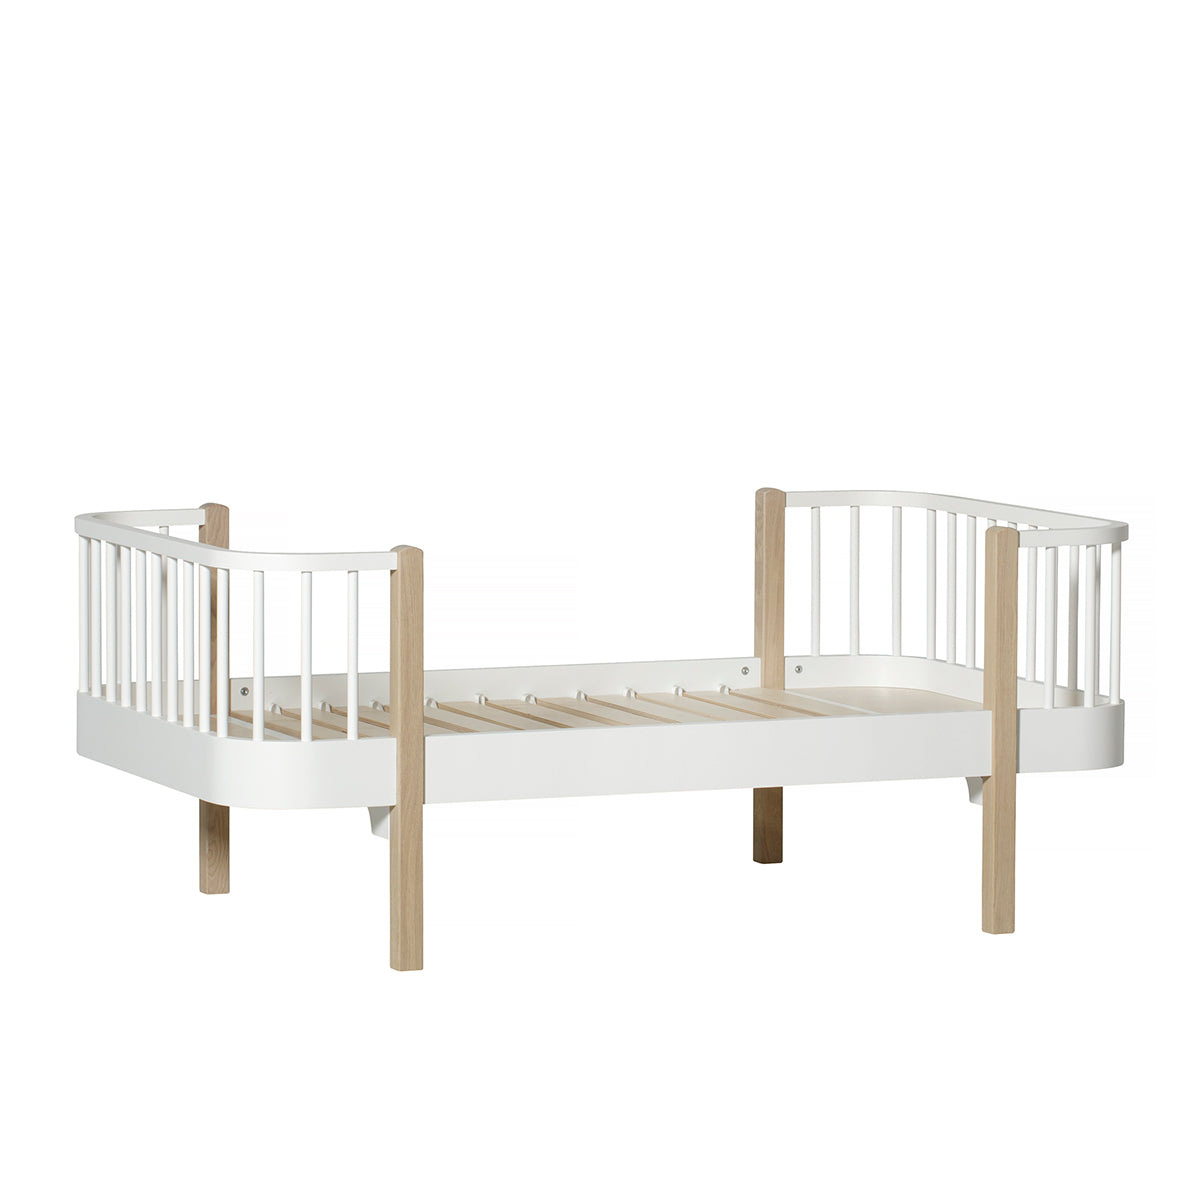 Oliver Furniture Wood Original junior bed, 90 x 160cm, white/oak